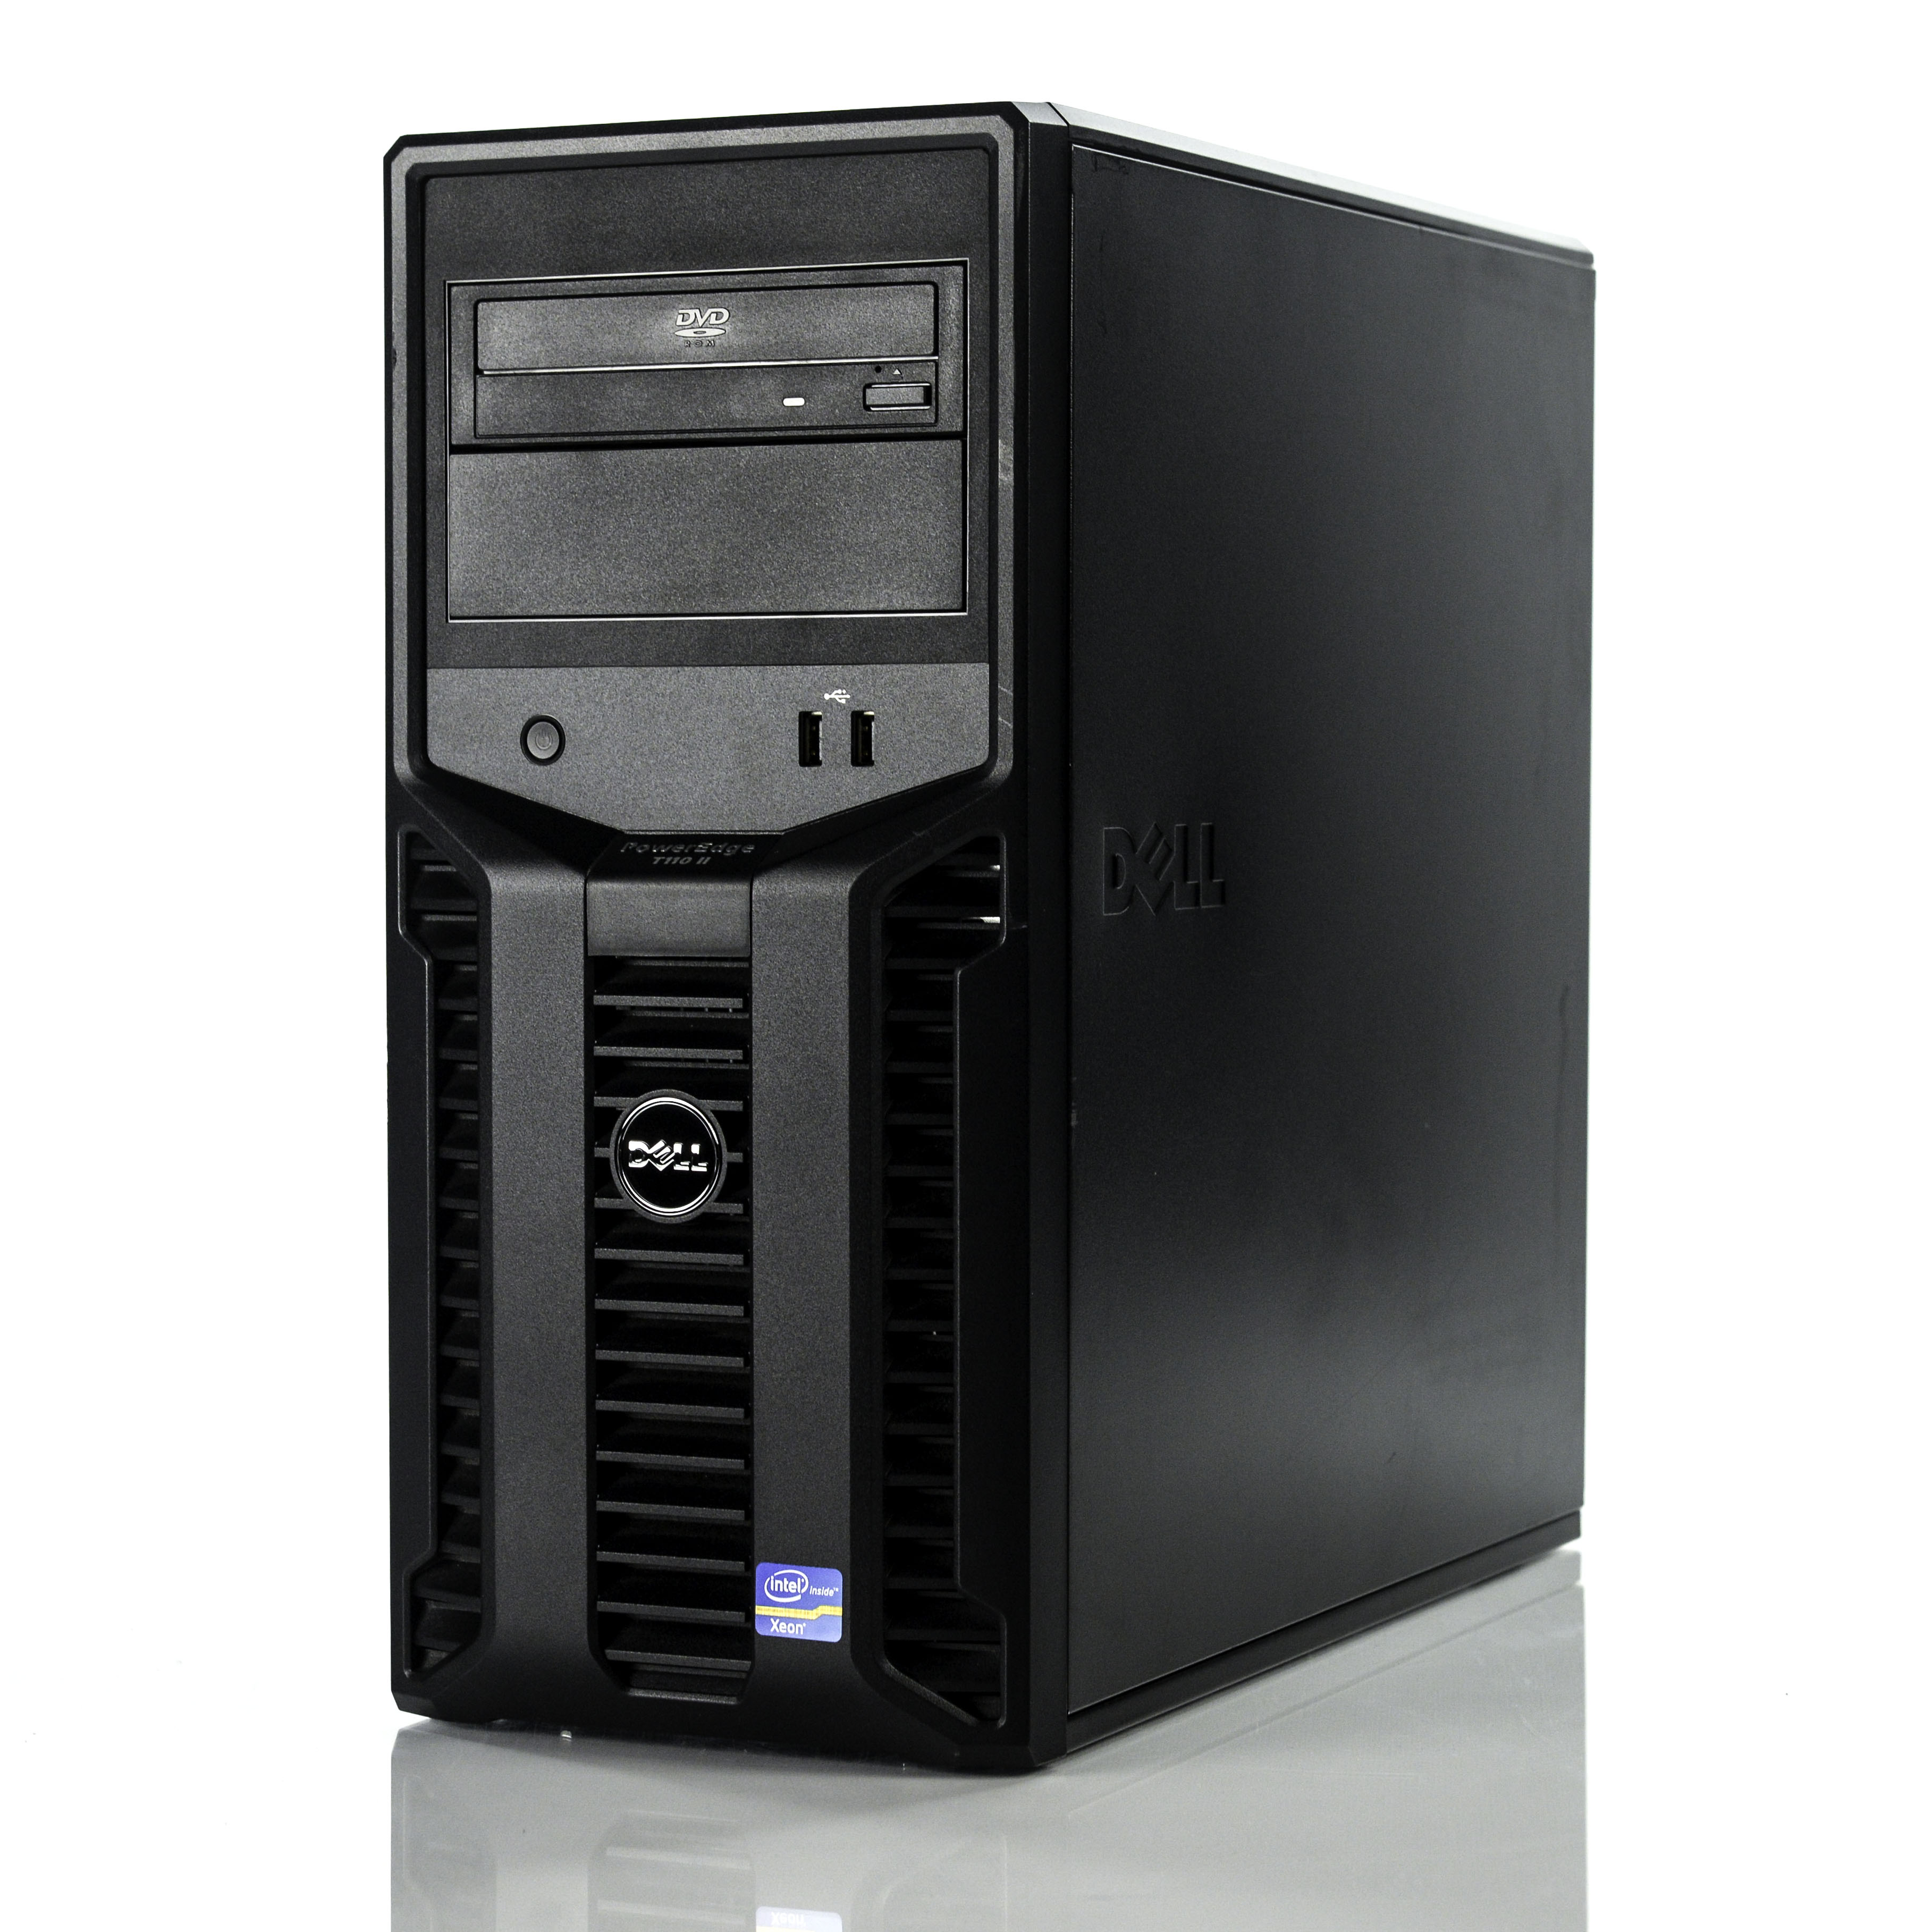 Dell PowerEdgeT110 II Server E3-1220 3.1GHz 8GB 1TB Win 7 Pro 1 Yr Wty